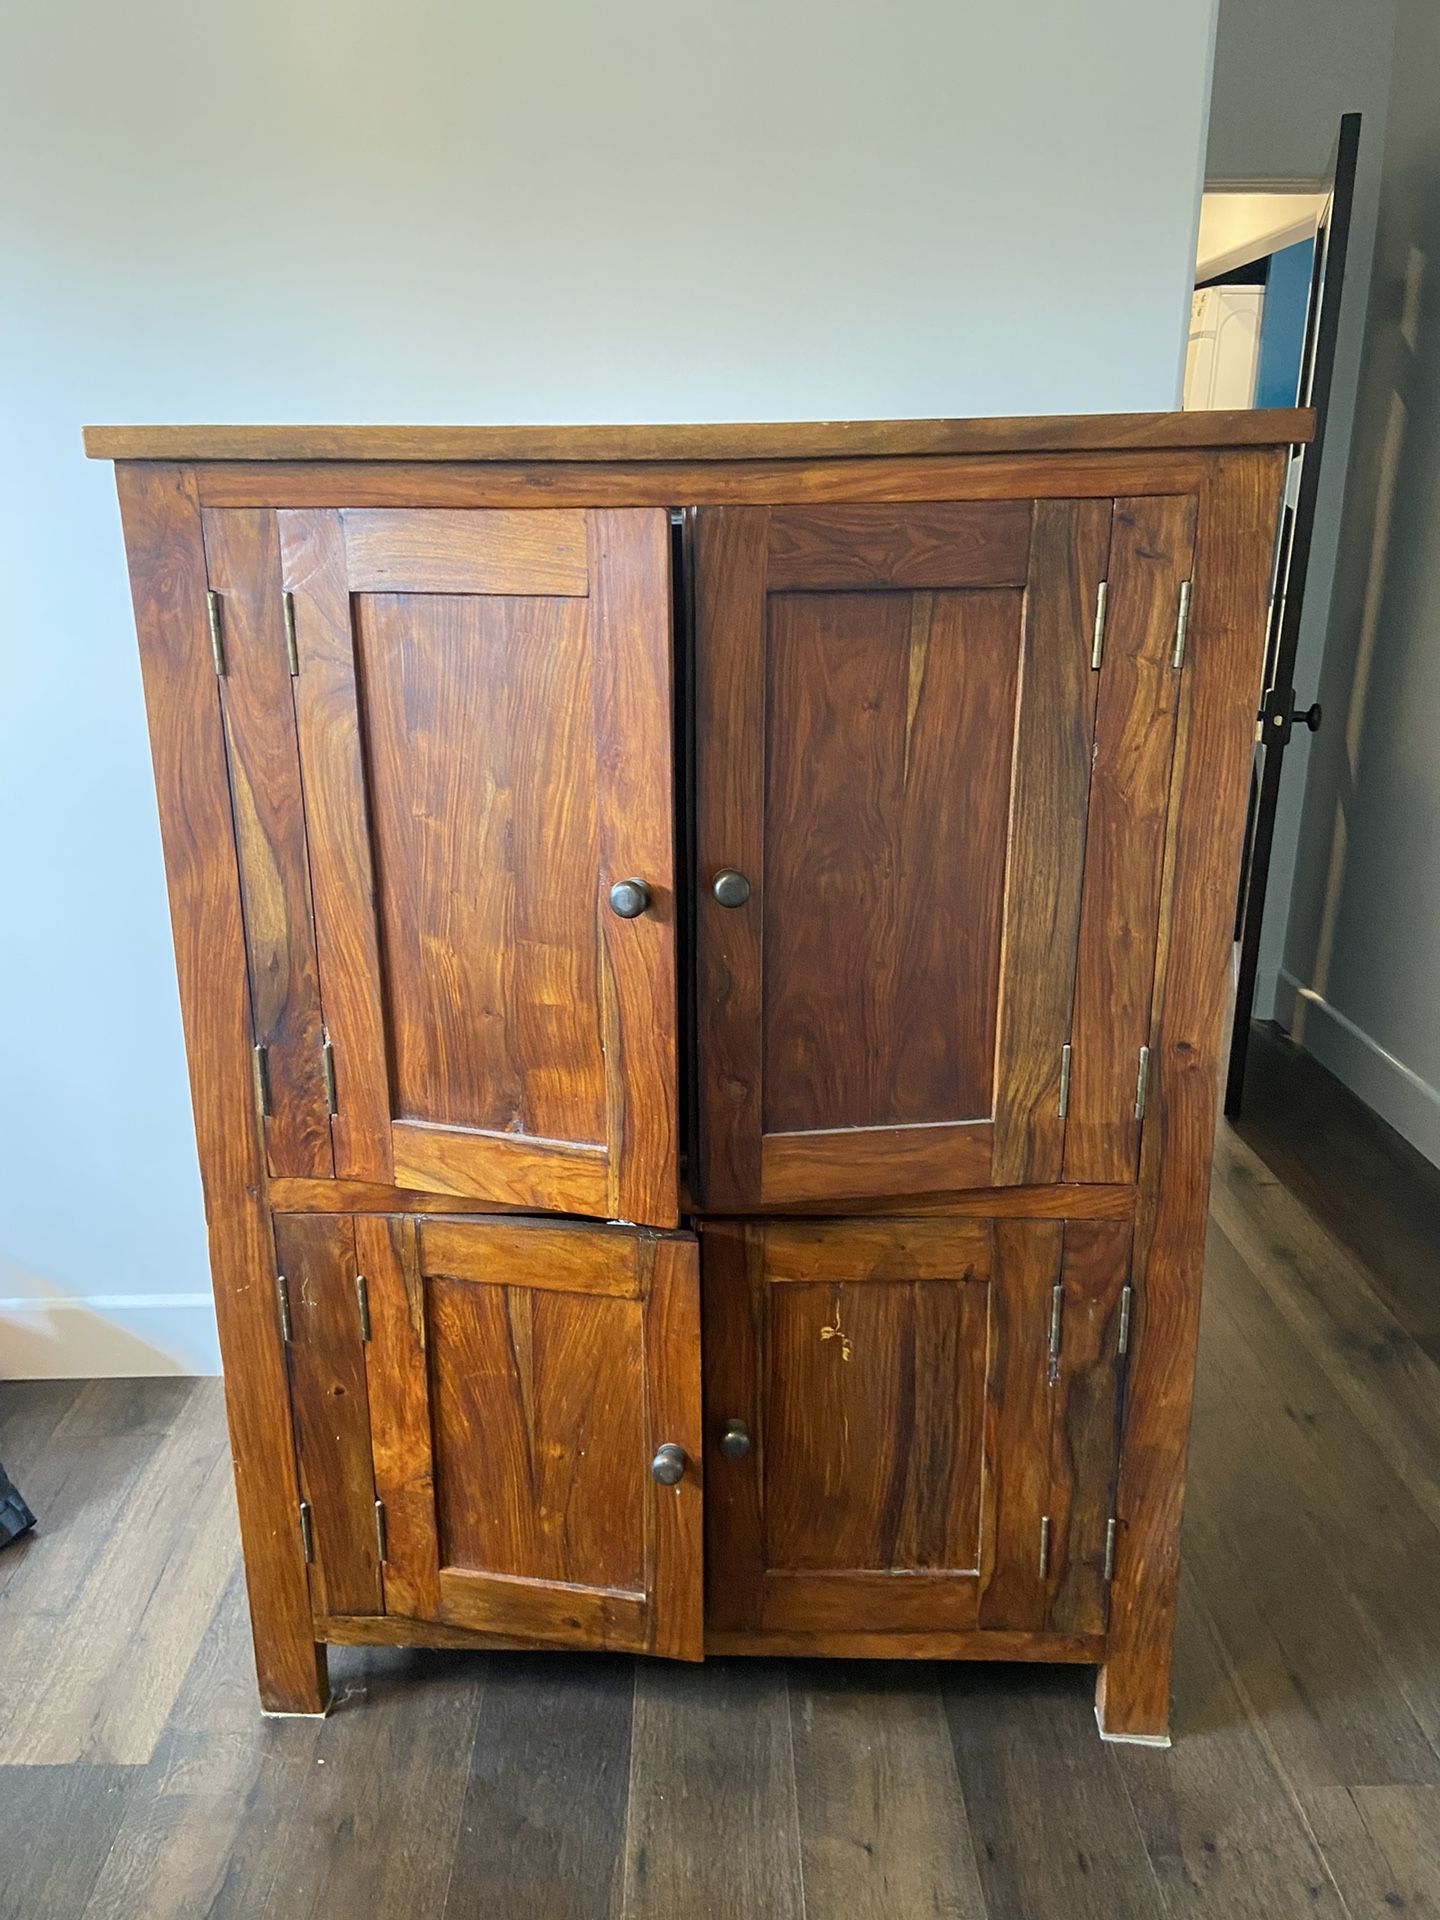 Beautiful wood armoire